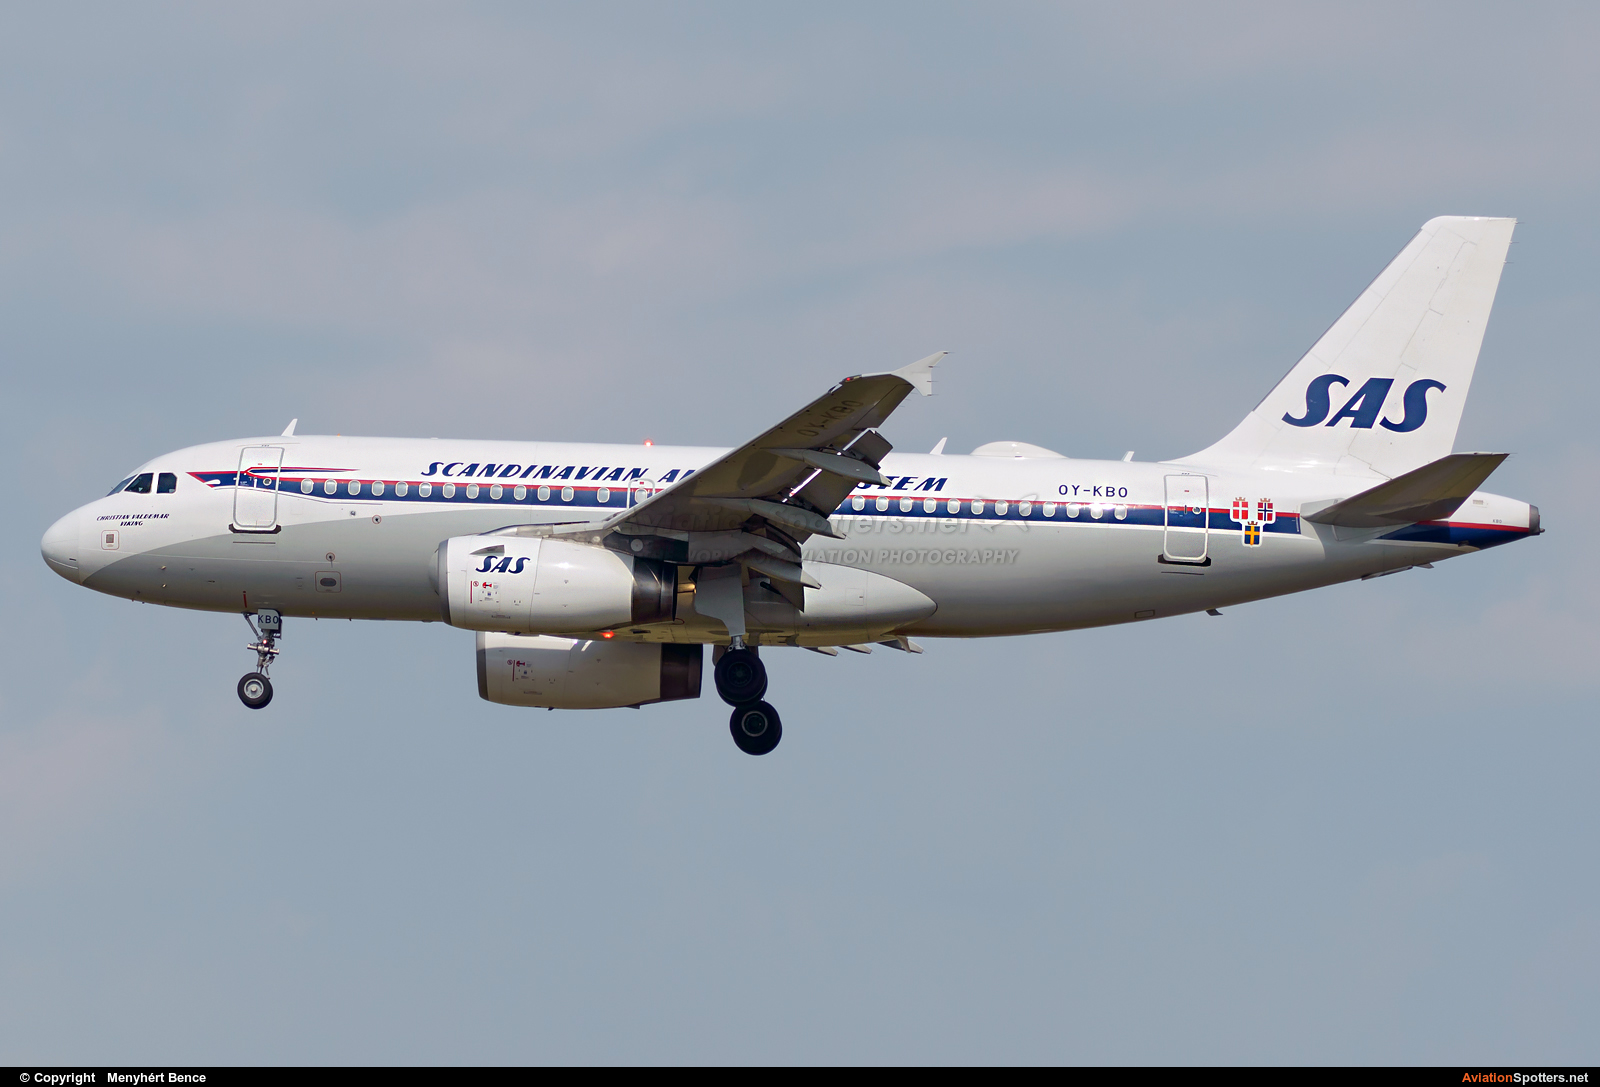 SAS - Scandinavian Airlines  -  A319  (OY-KBO) By Menyhért Bence (hadesdras91)